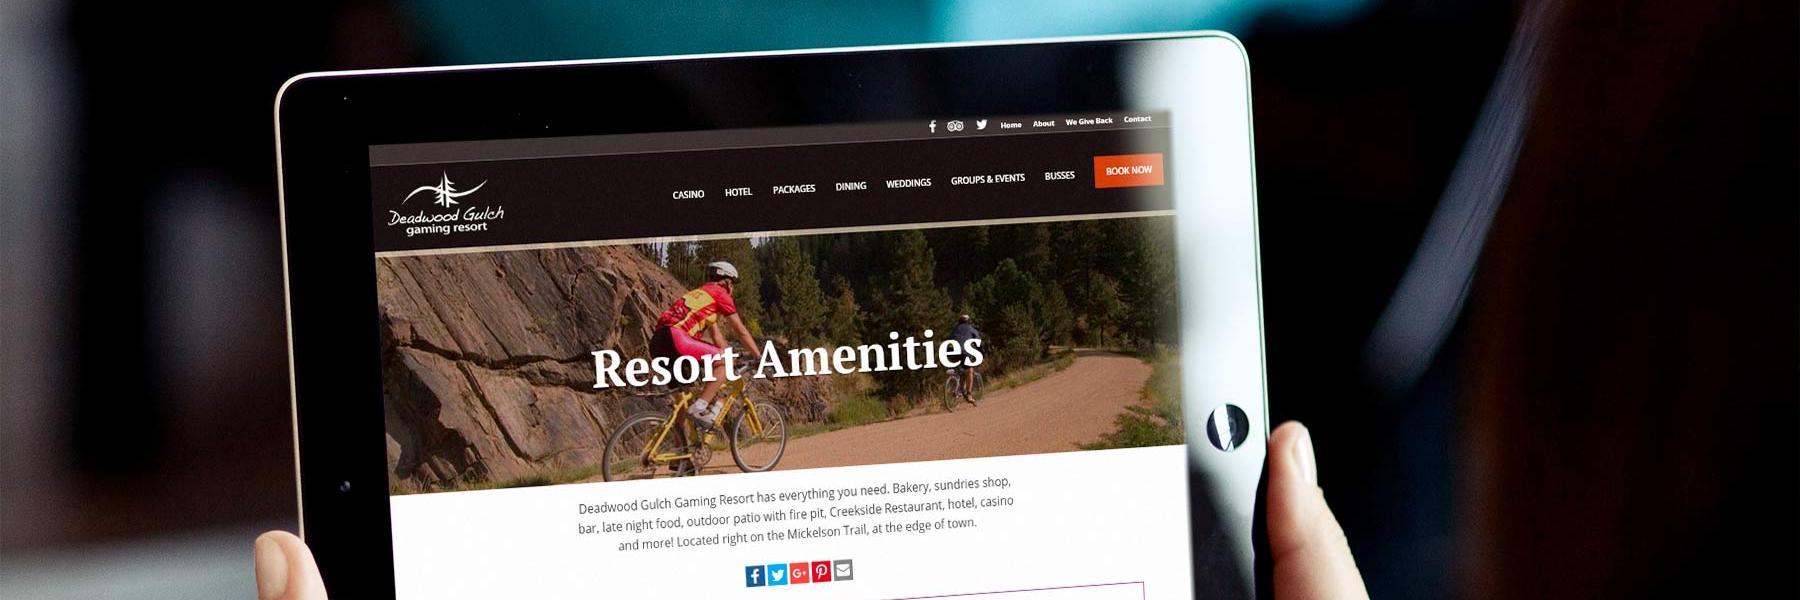 Deadwood Gulch Resort website being used on tablet